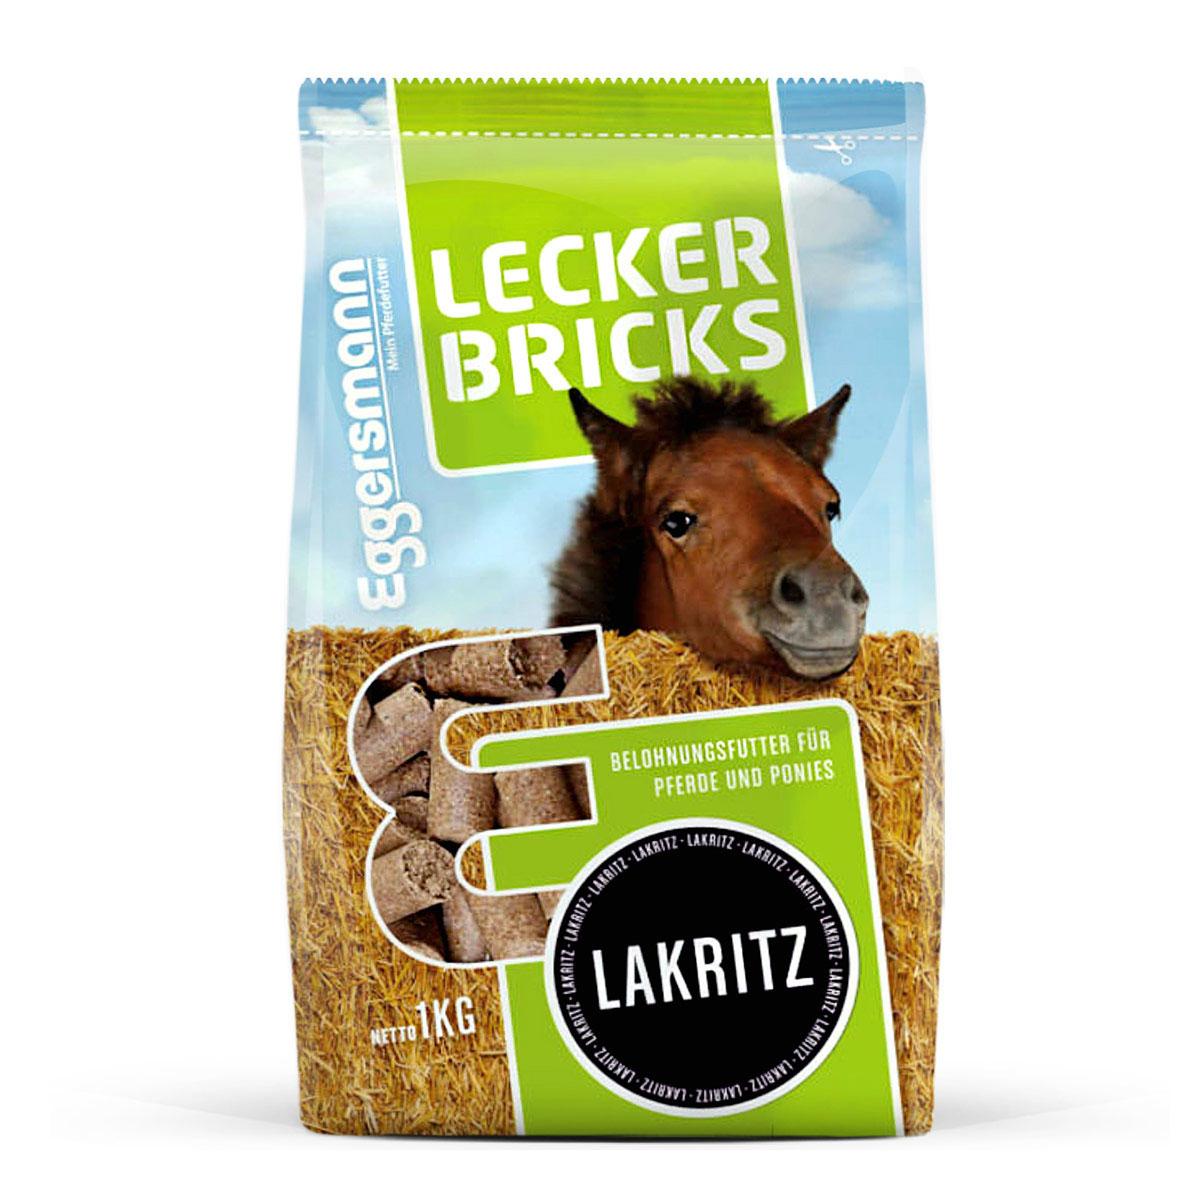 Eggersmann Lecker Bricks Lakritz 1 kg